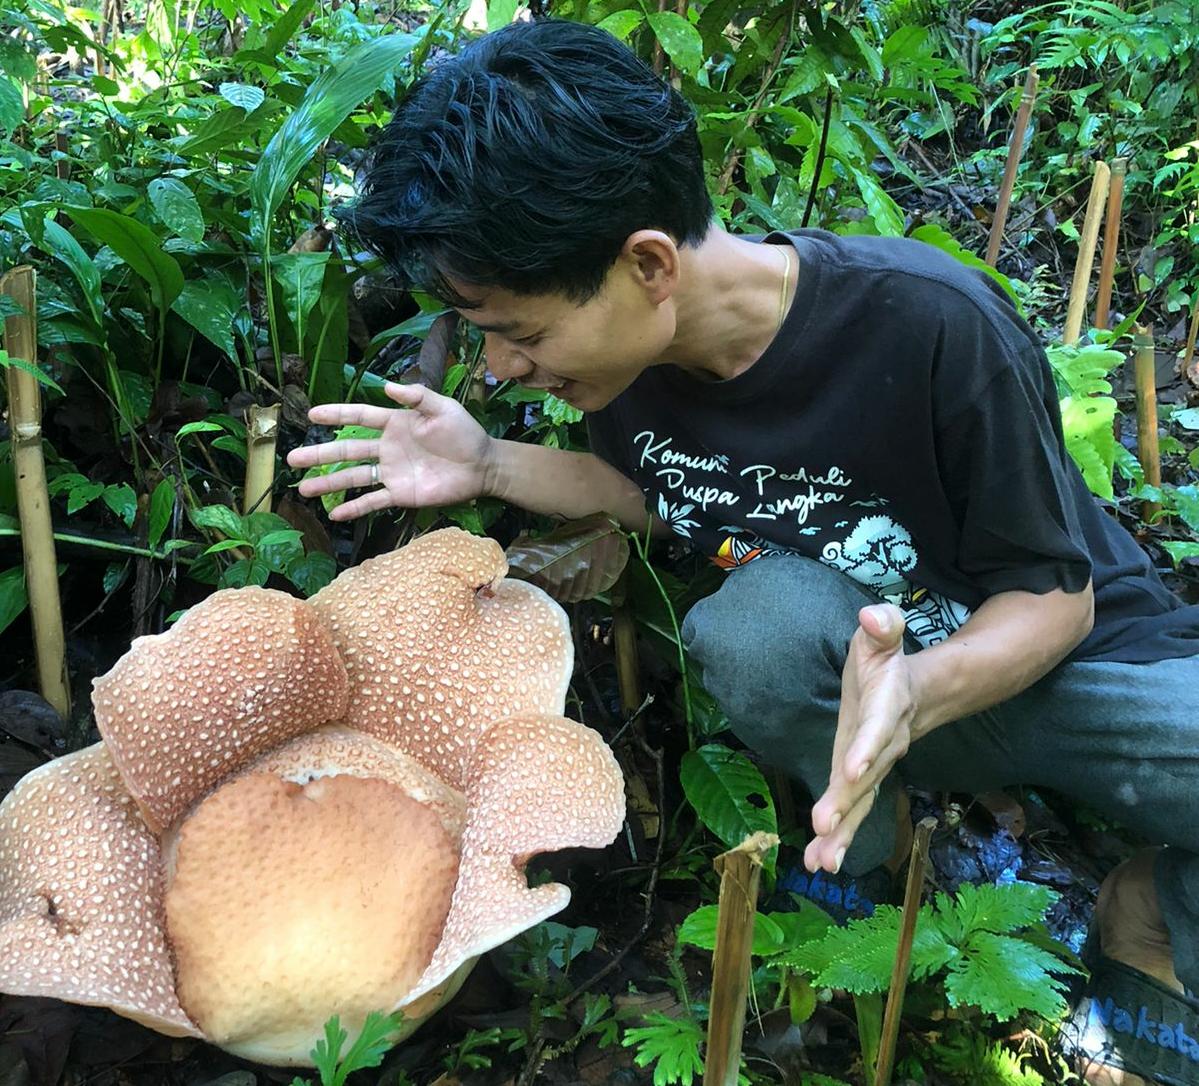 Bunga Rafflesia Mekar Sempurna Sampai Akhir Pekan ini, Jangan Lewatkan, Lokasinya Dekat Objek Wisata